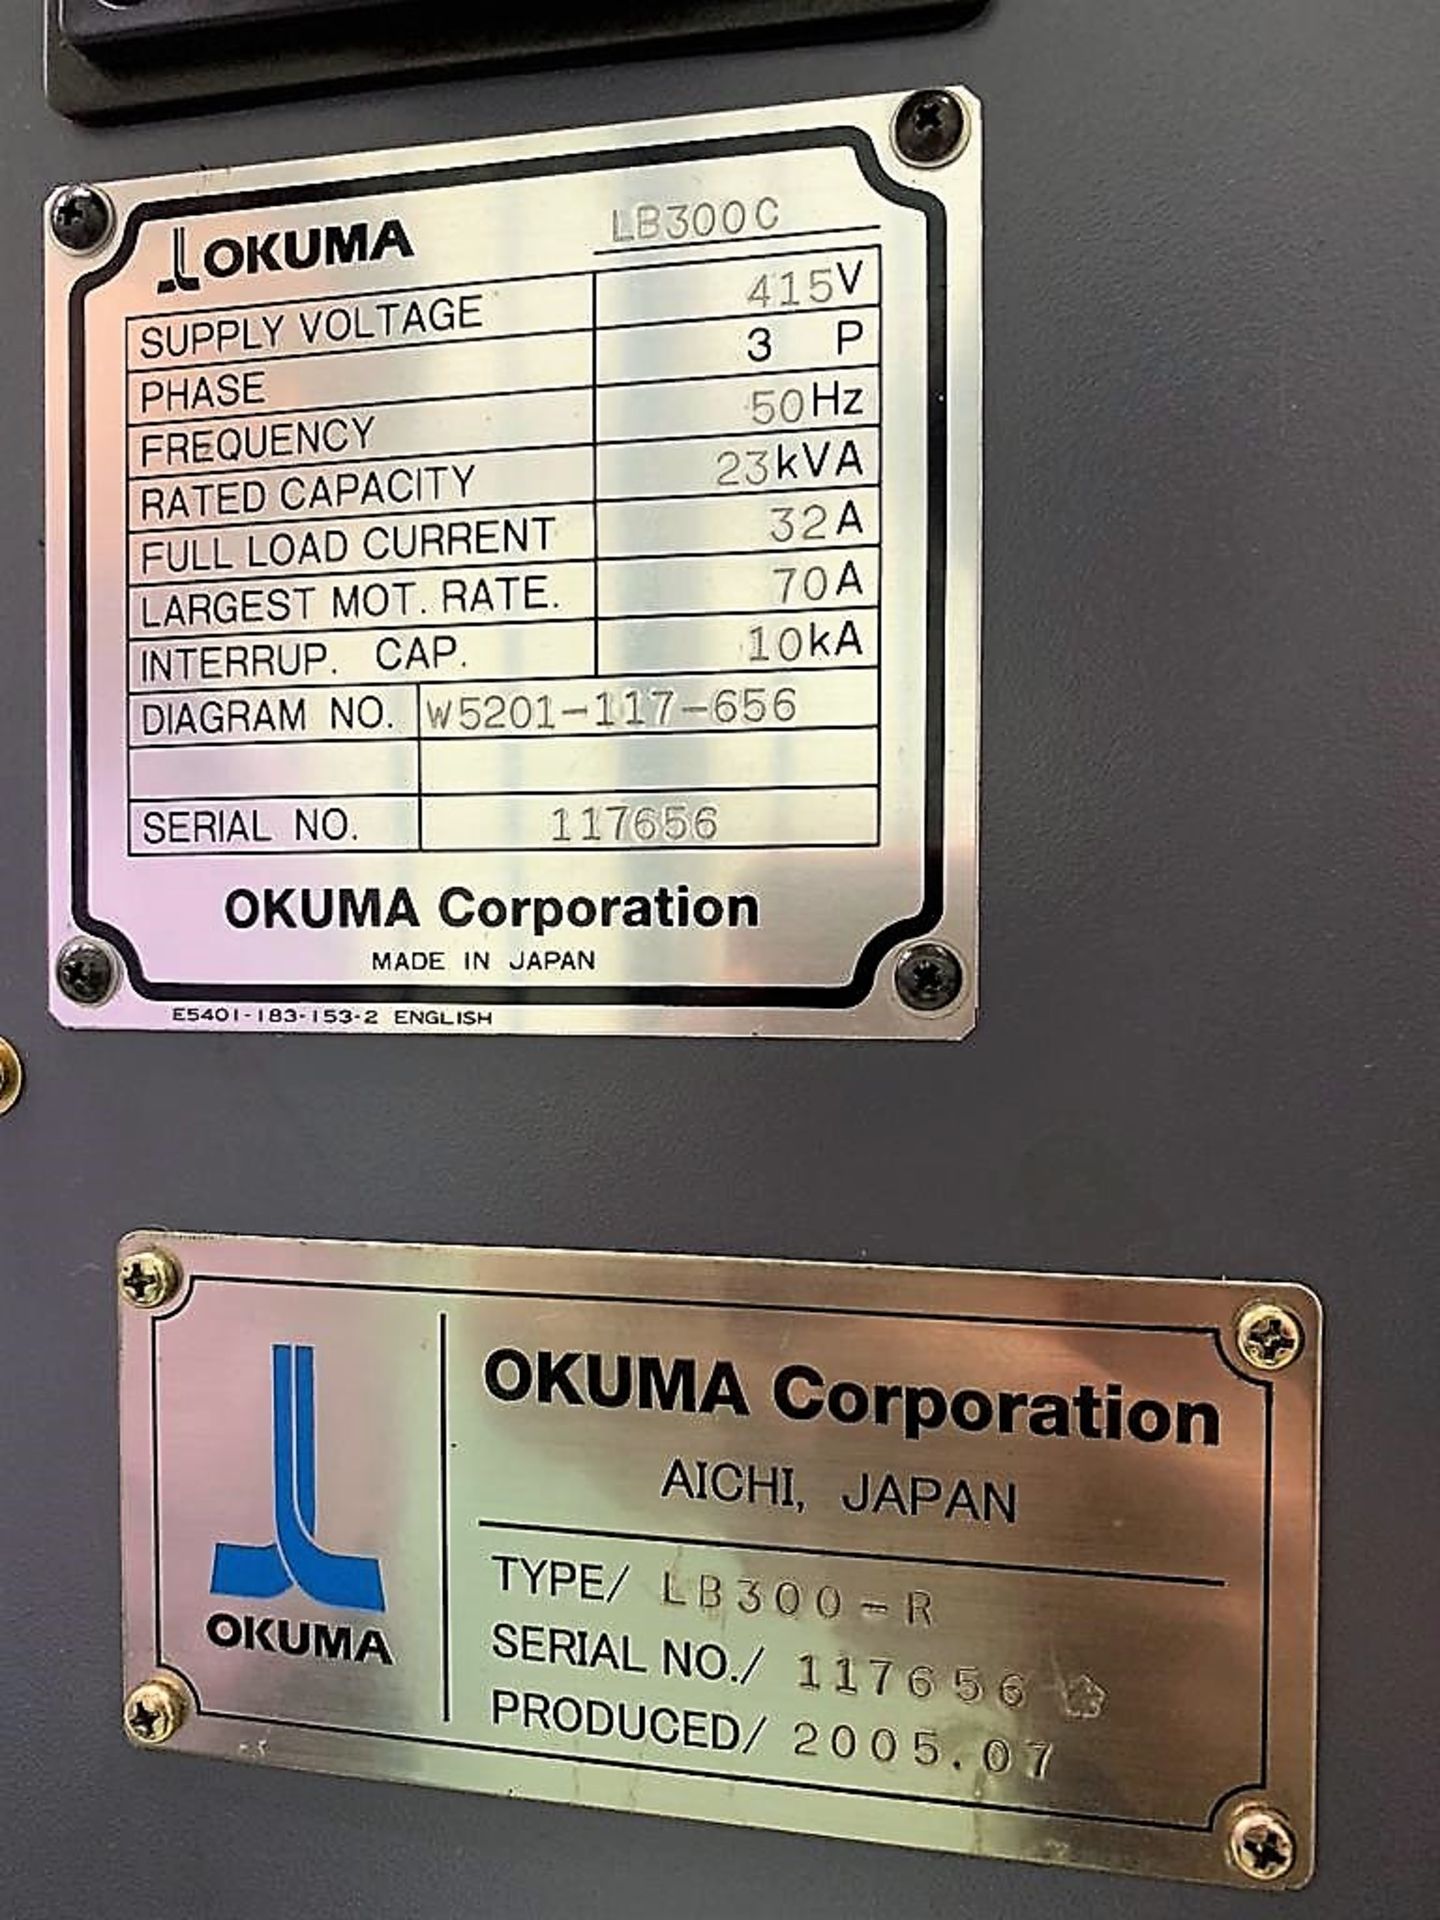 Okuma LB300R 2-Axis CNC Lathe, 8" 3-Jaw Chuck, S/N 117656, New 2005 - Image 9 of 12